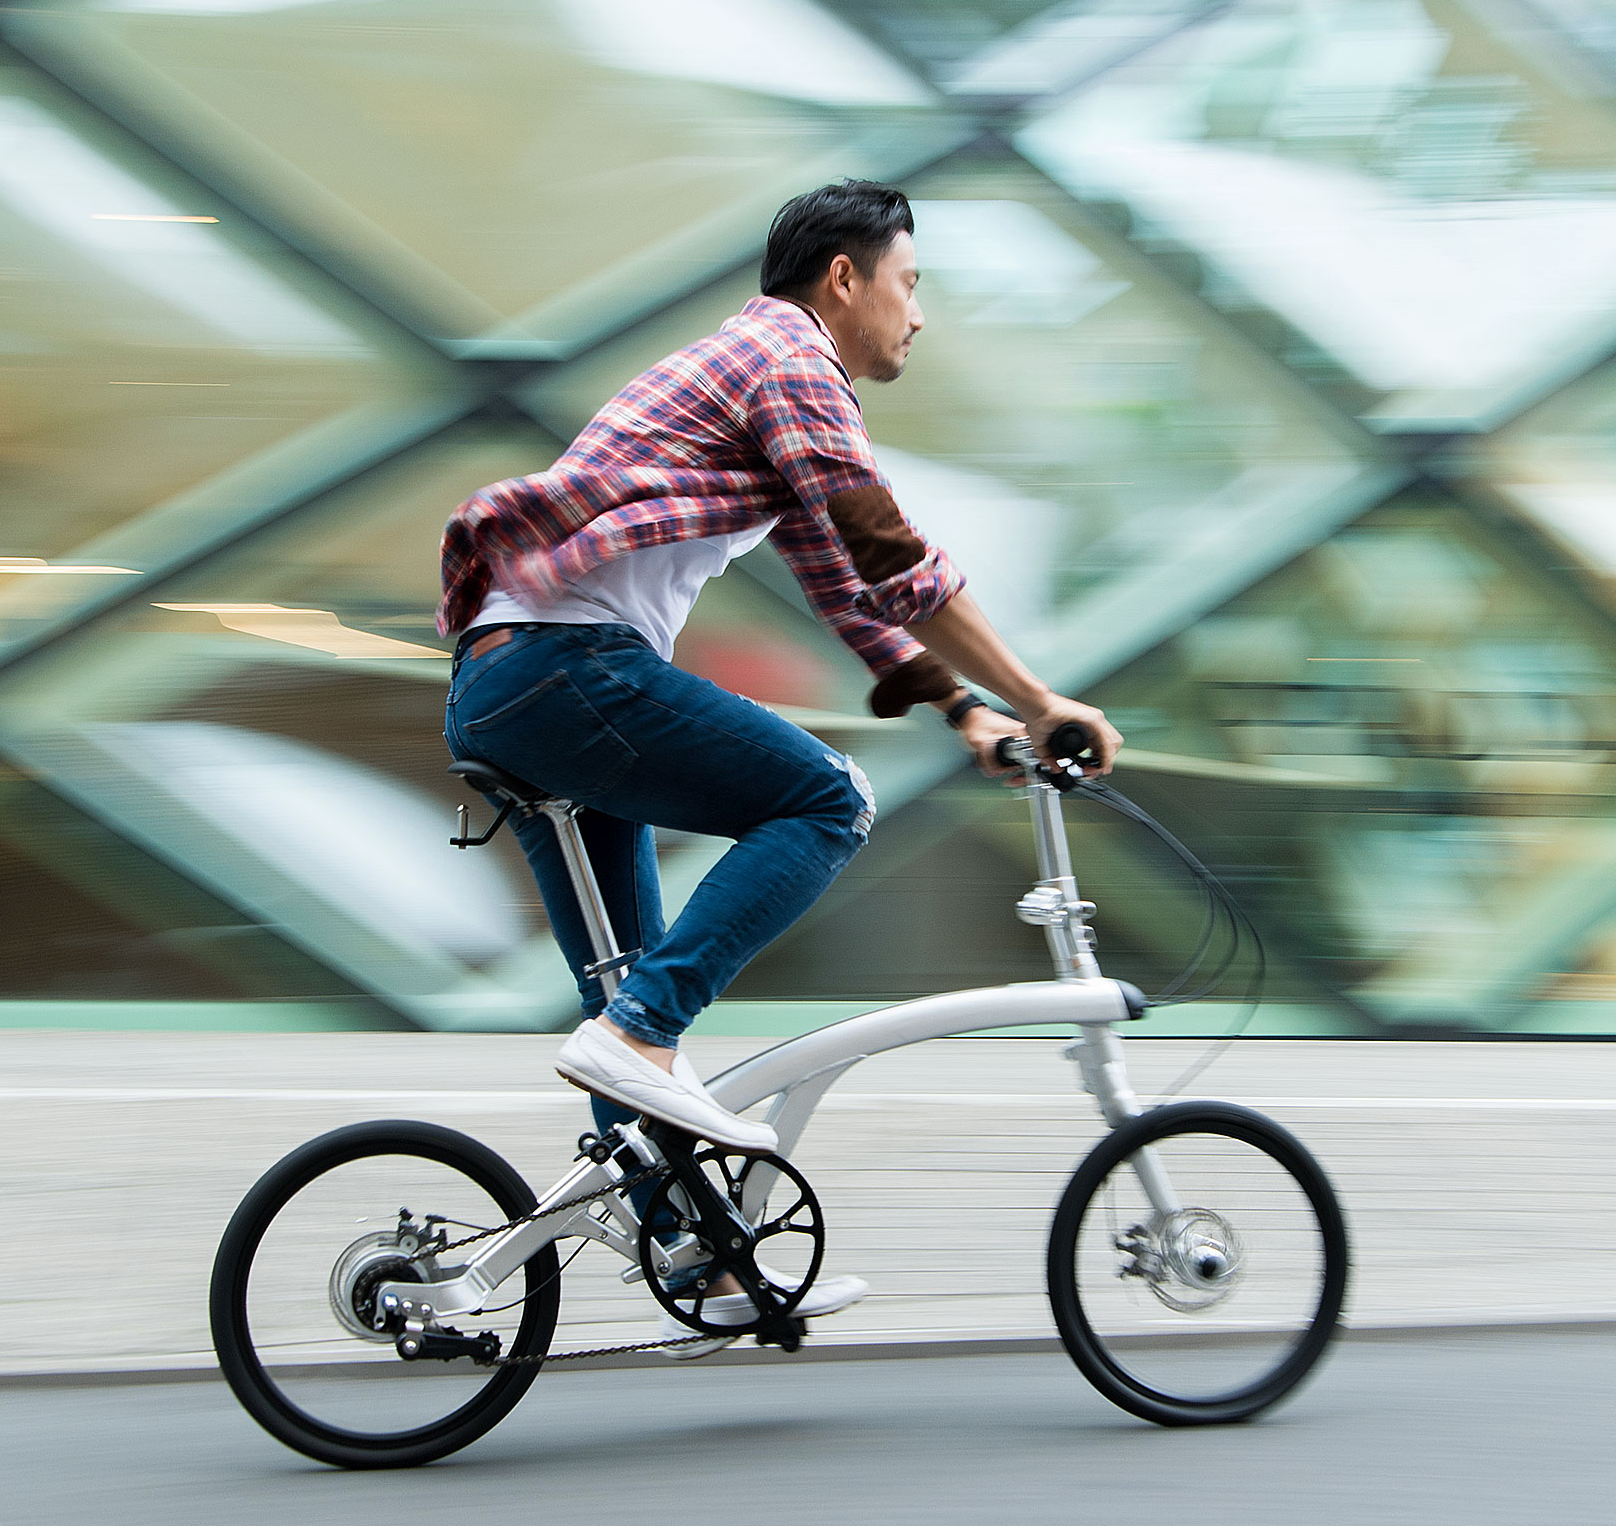 A man riding the white Iruka C bike in the city.